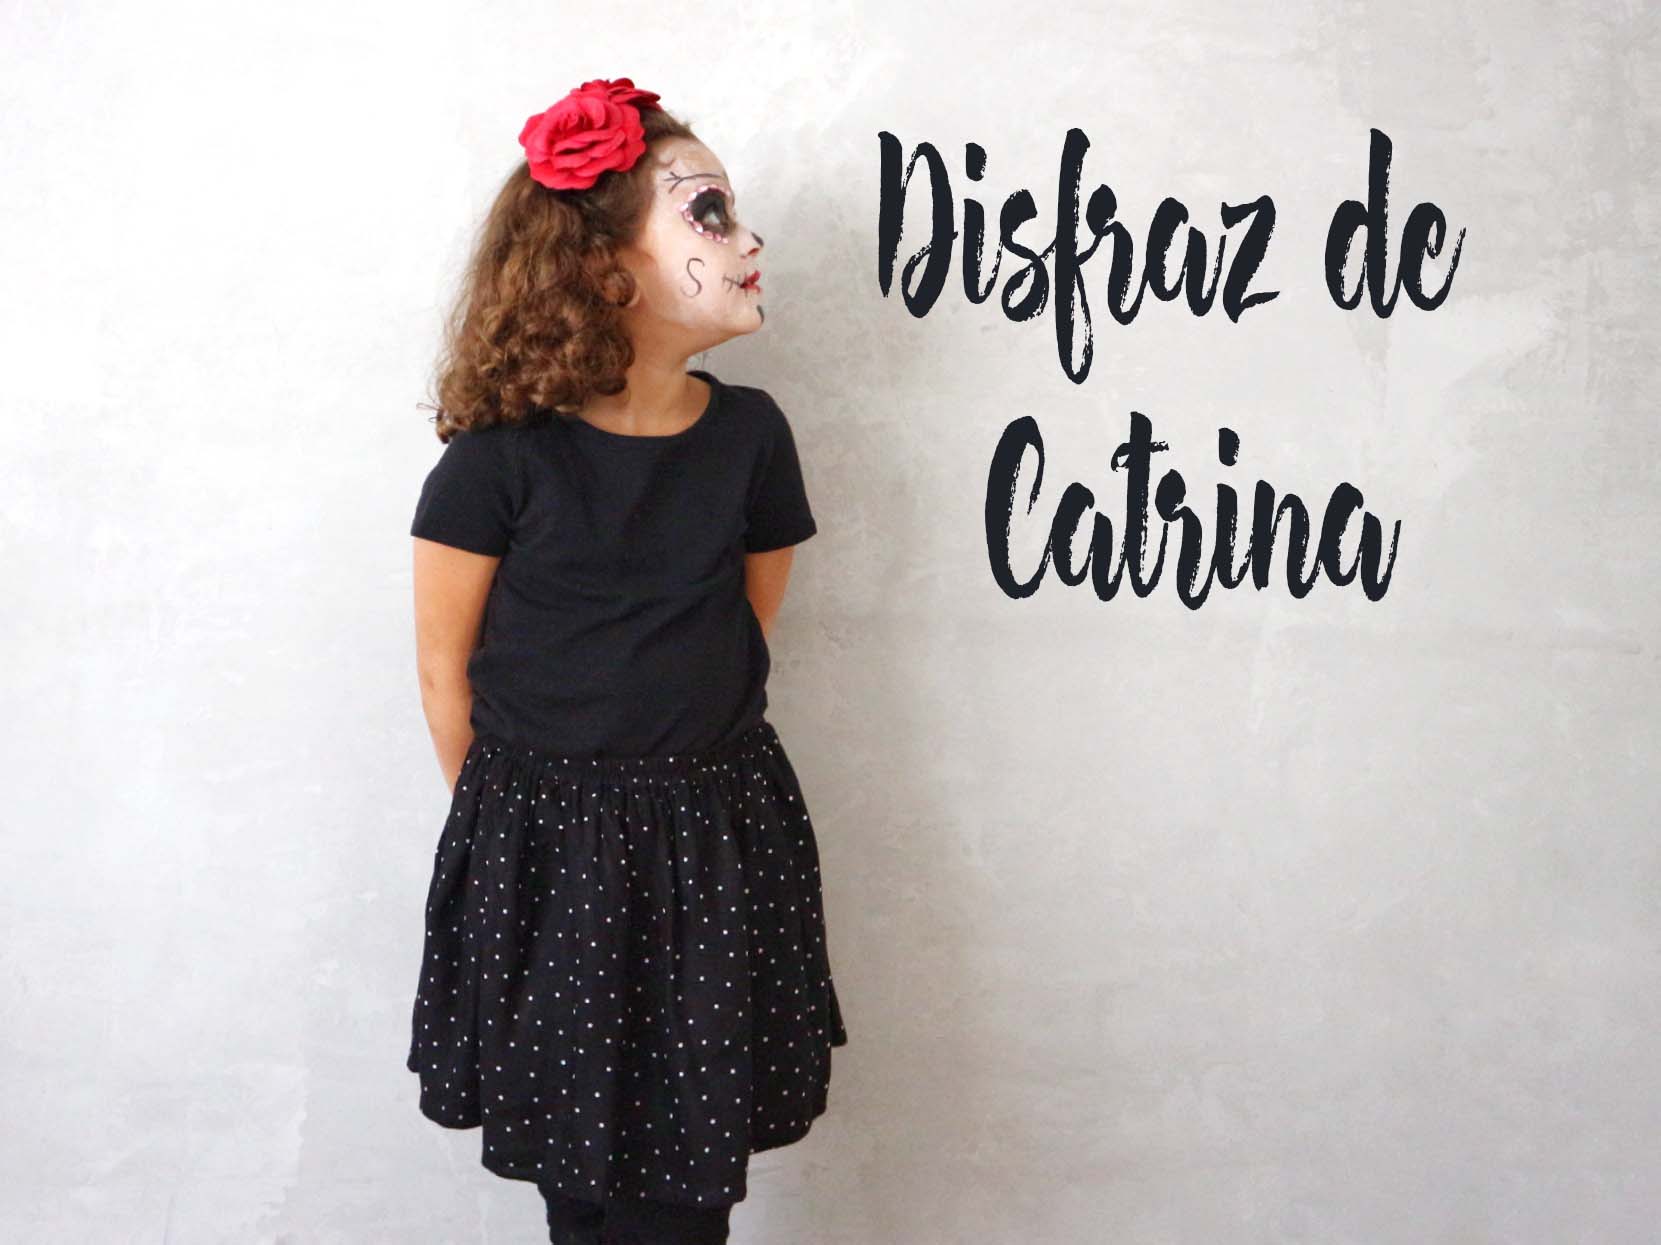 Disfraz casero para halloween. de catrina. - The Beautiful Project